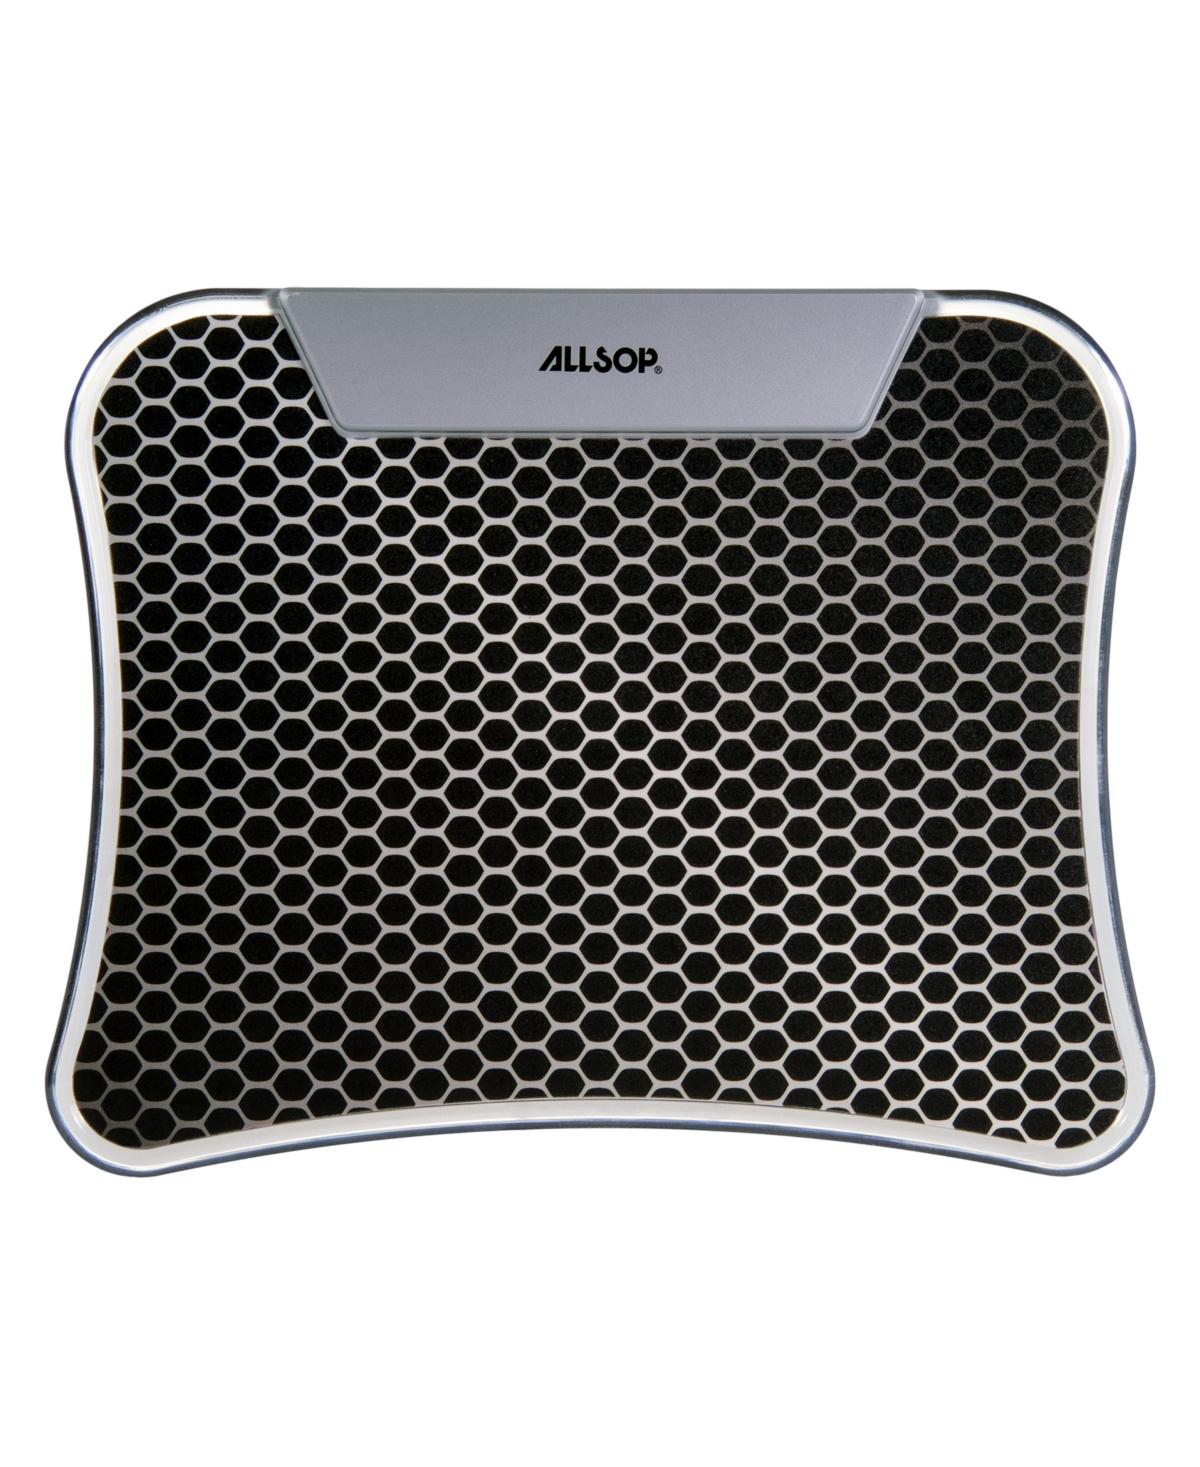 UPC 035286309189 product image for Allsop Led Mouse Pad | upcitemdb.com